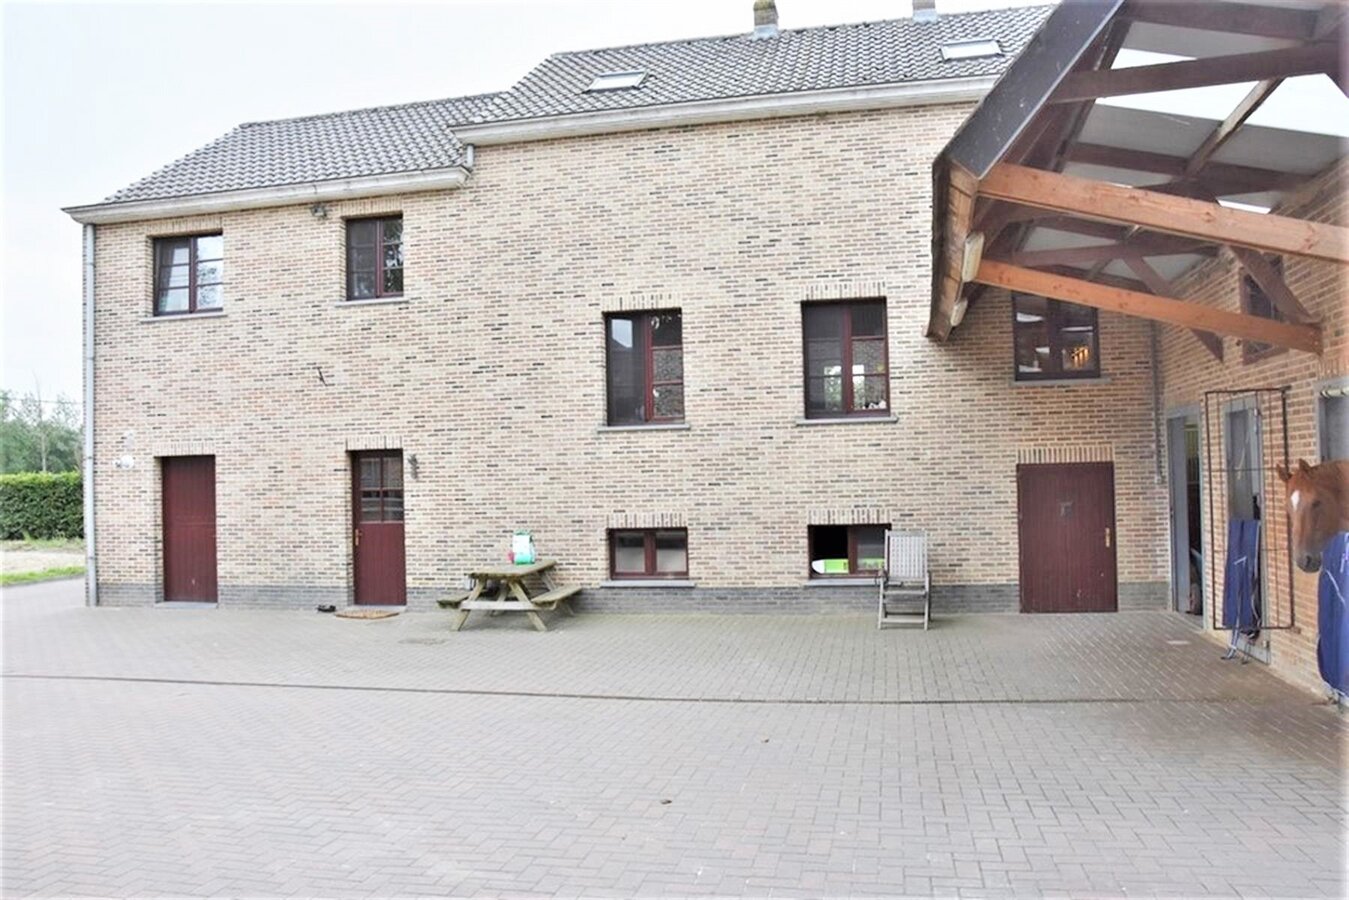 Property sold in Lennik